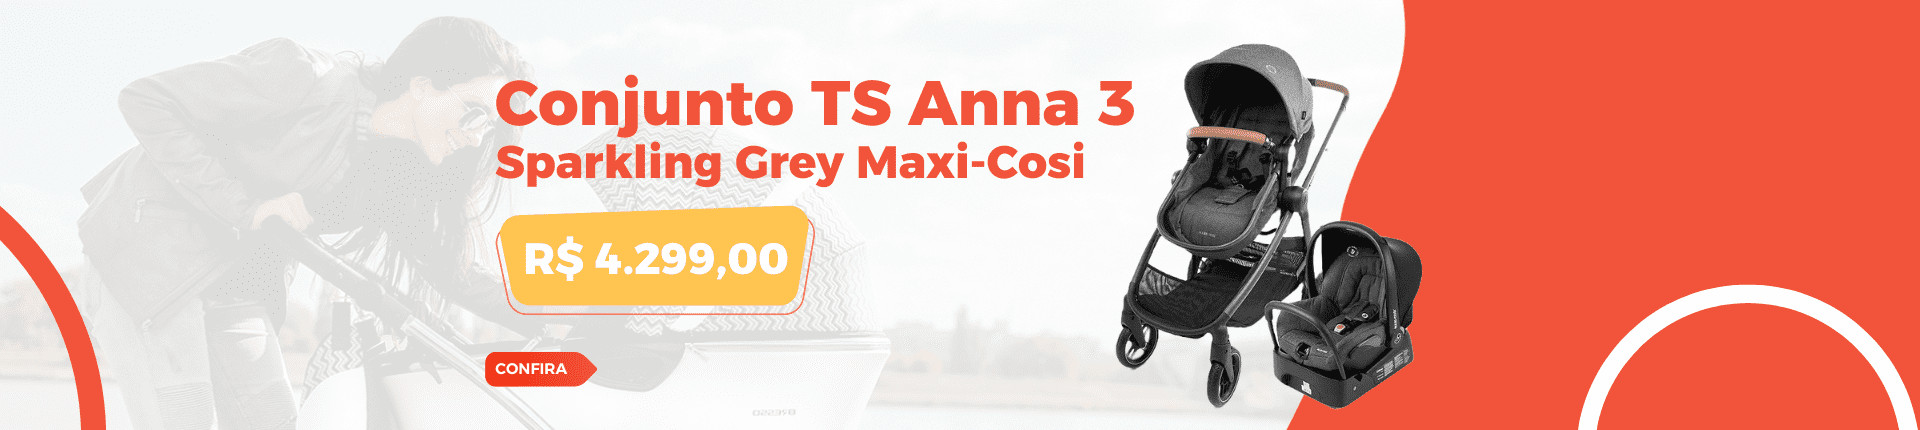 Conjunto TS Anna 3 Sparkling Grey Maxi-Cosi